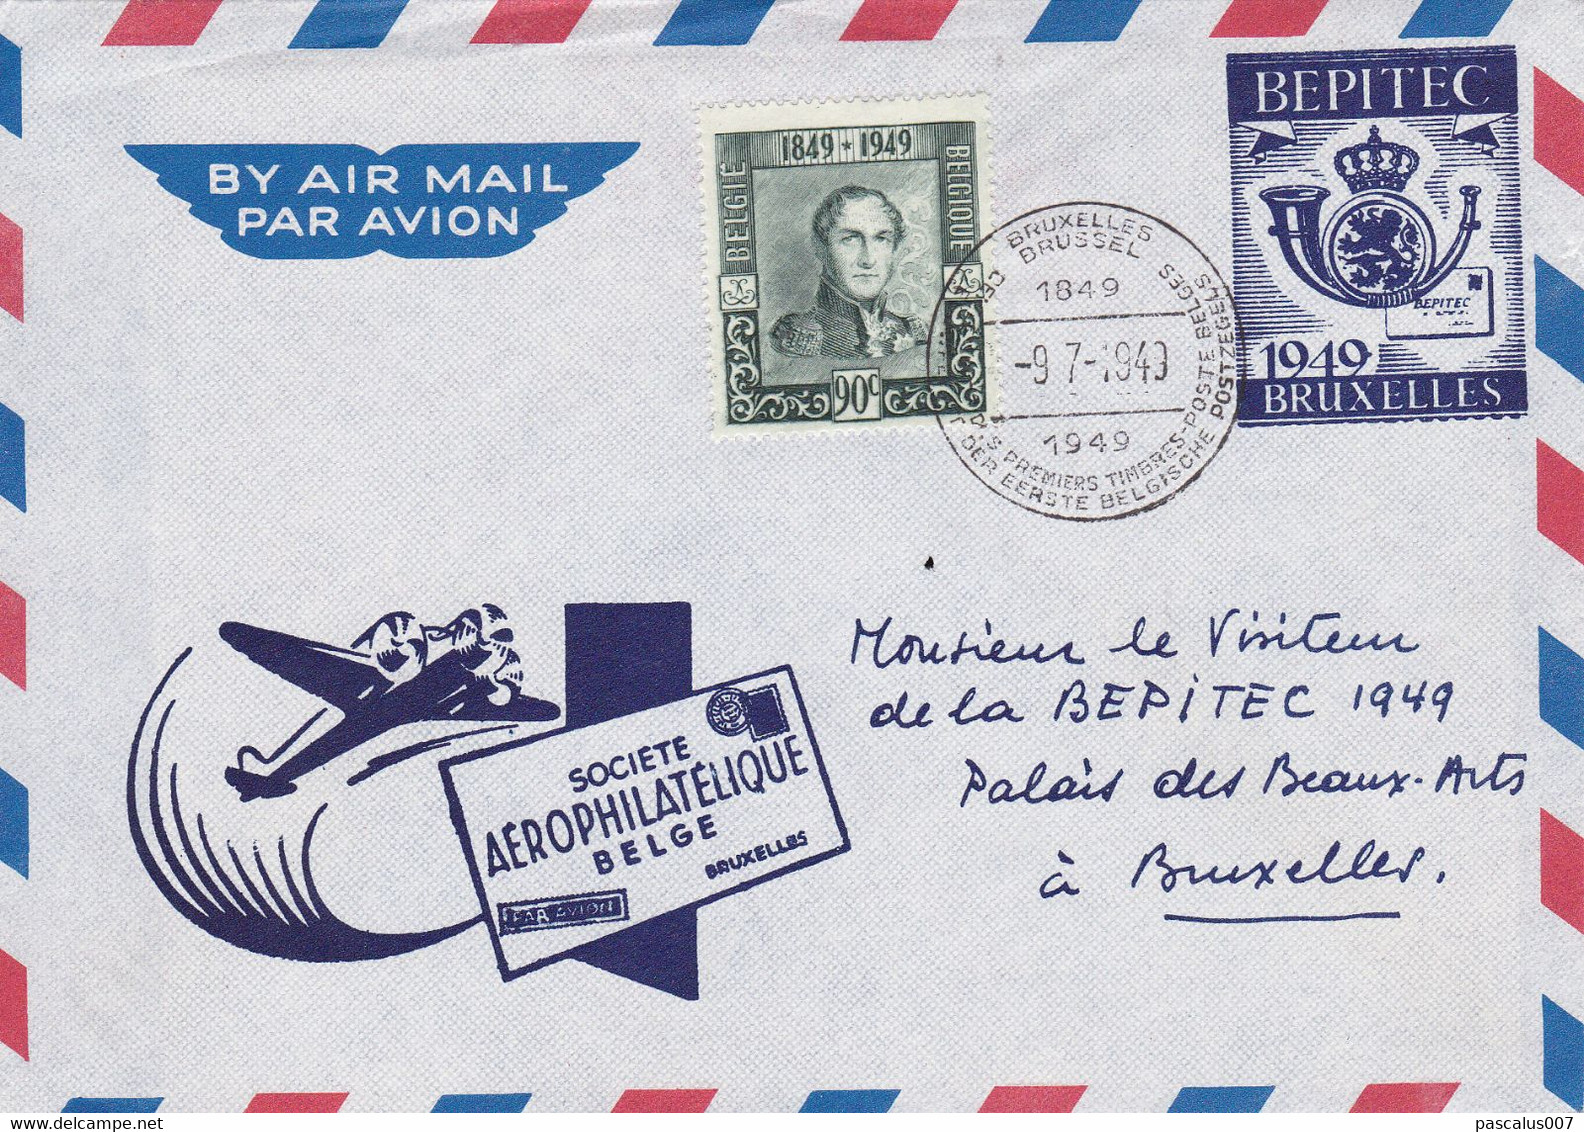 B01-290 FDC Avion Bepitec 807 Dynastie Royal Roi Léopold Ier N°2900 09-07-1949 Bruxelles Brussel 5.99€ - ....-1951